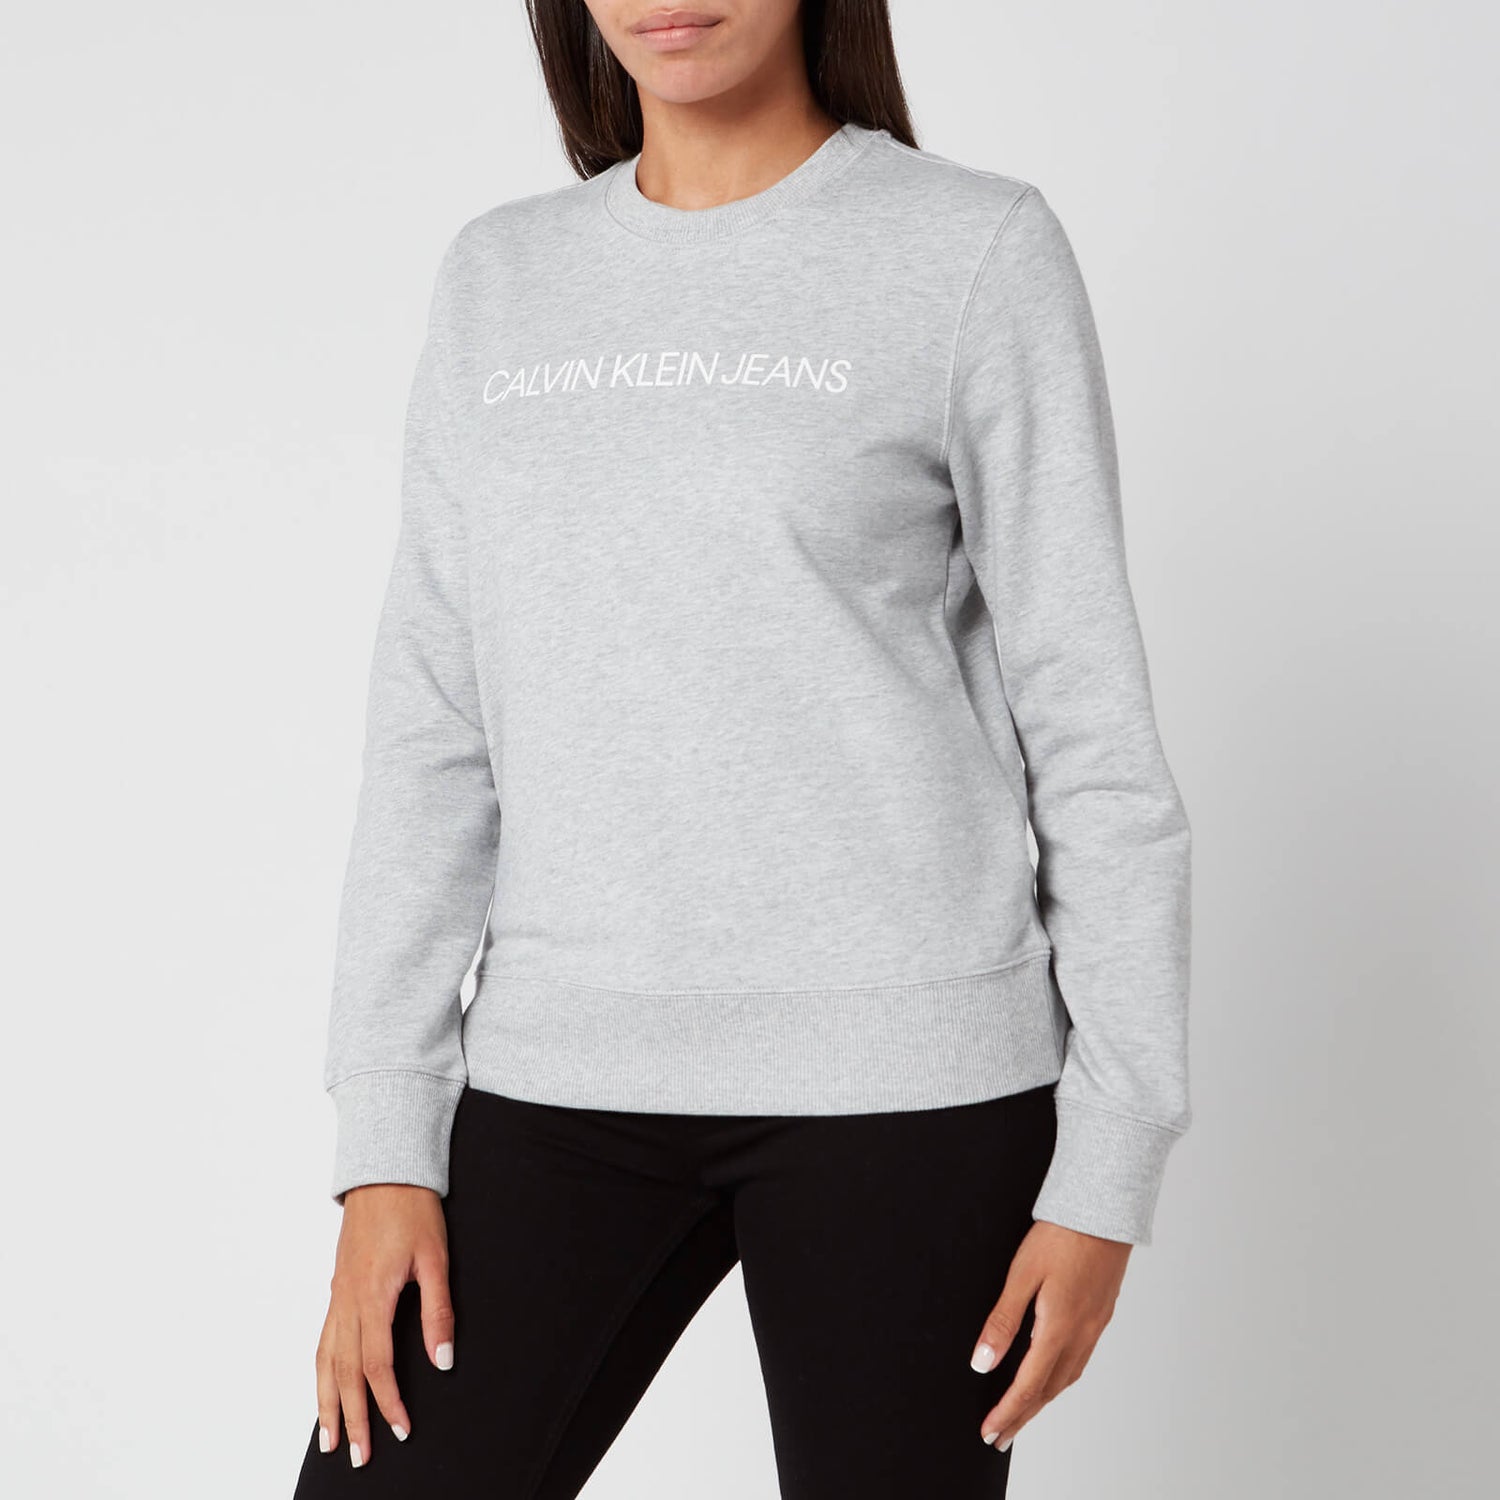 Jeans Calvin Neck Core Women\'s Klein Sweatshirt - Grey Crew Light Heather Logo Institutional